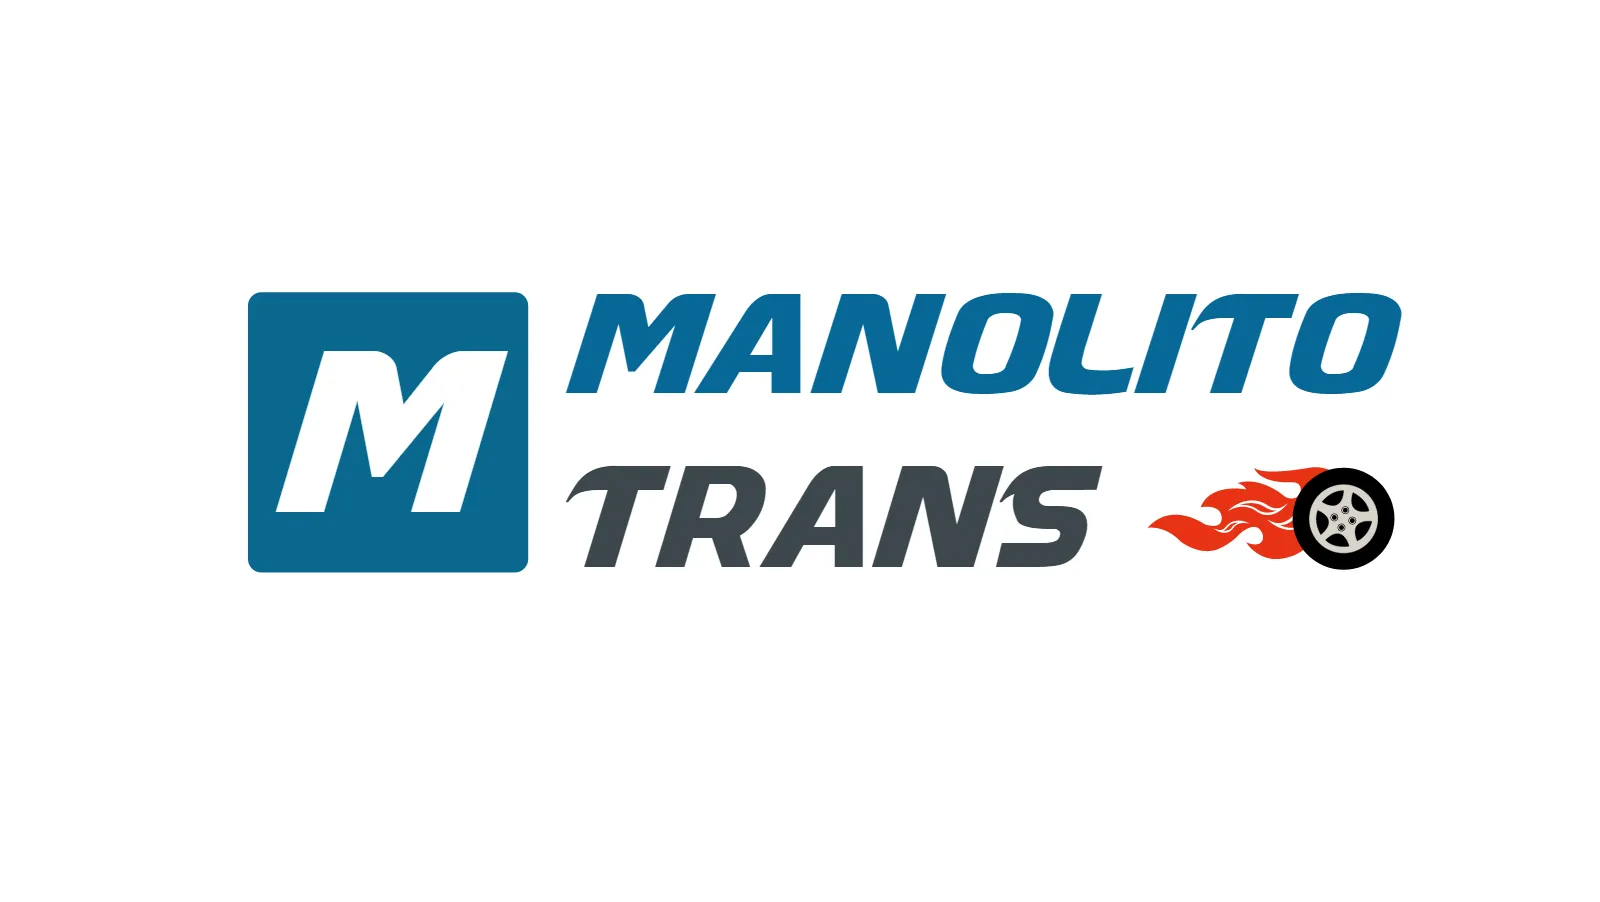 Manolito Trans